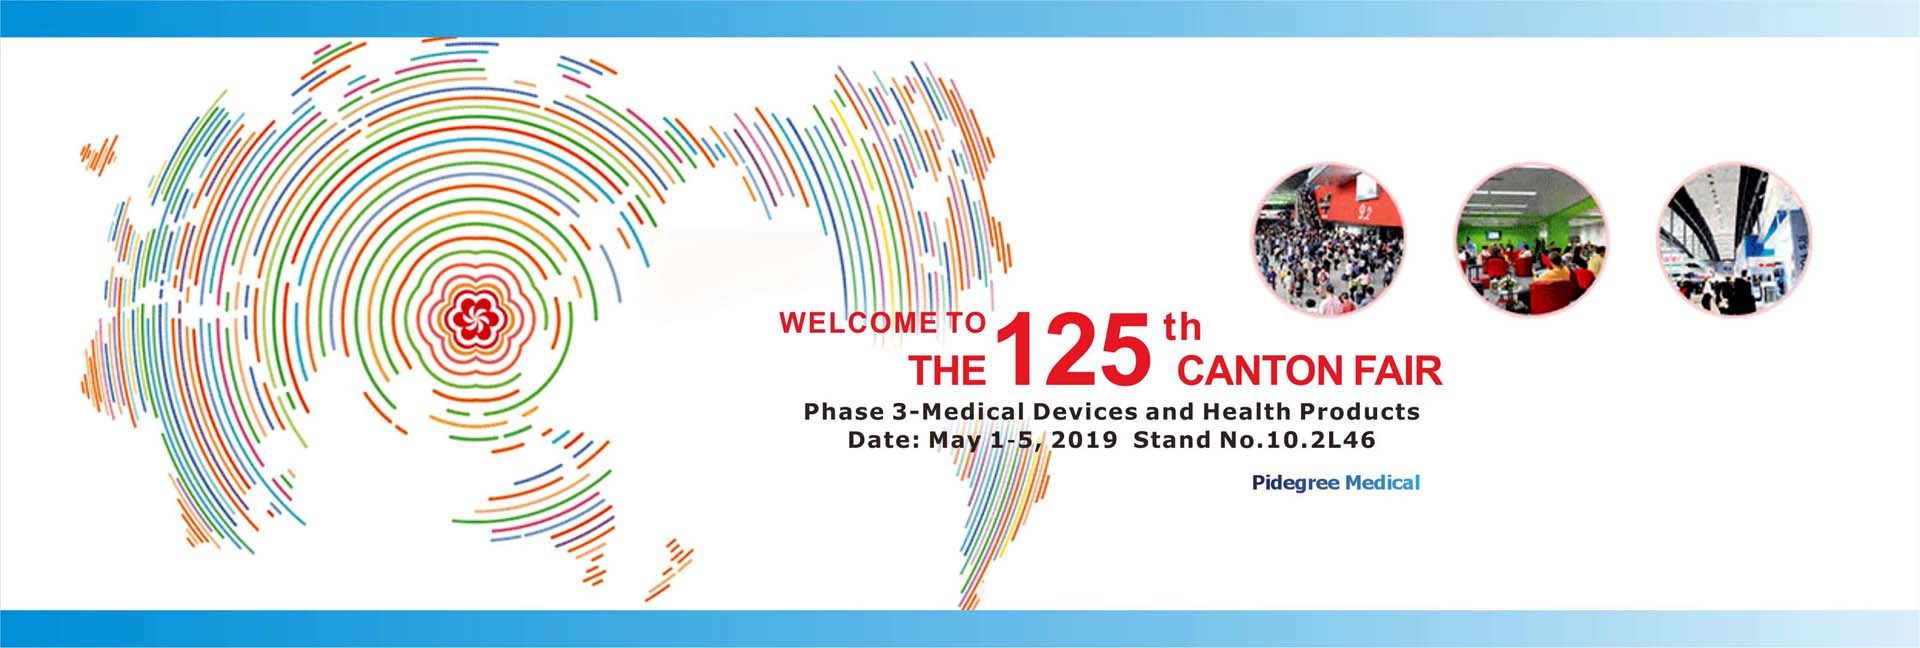 Pidegree Medical invites you to meet at 125th Canton Fair